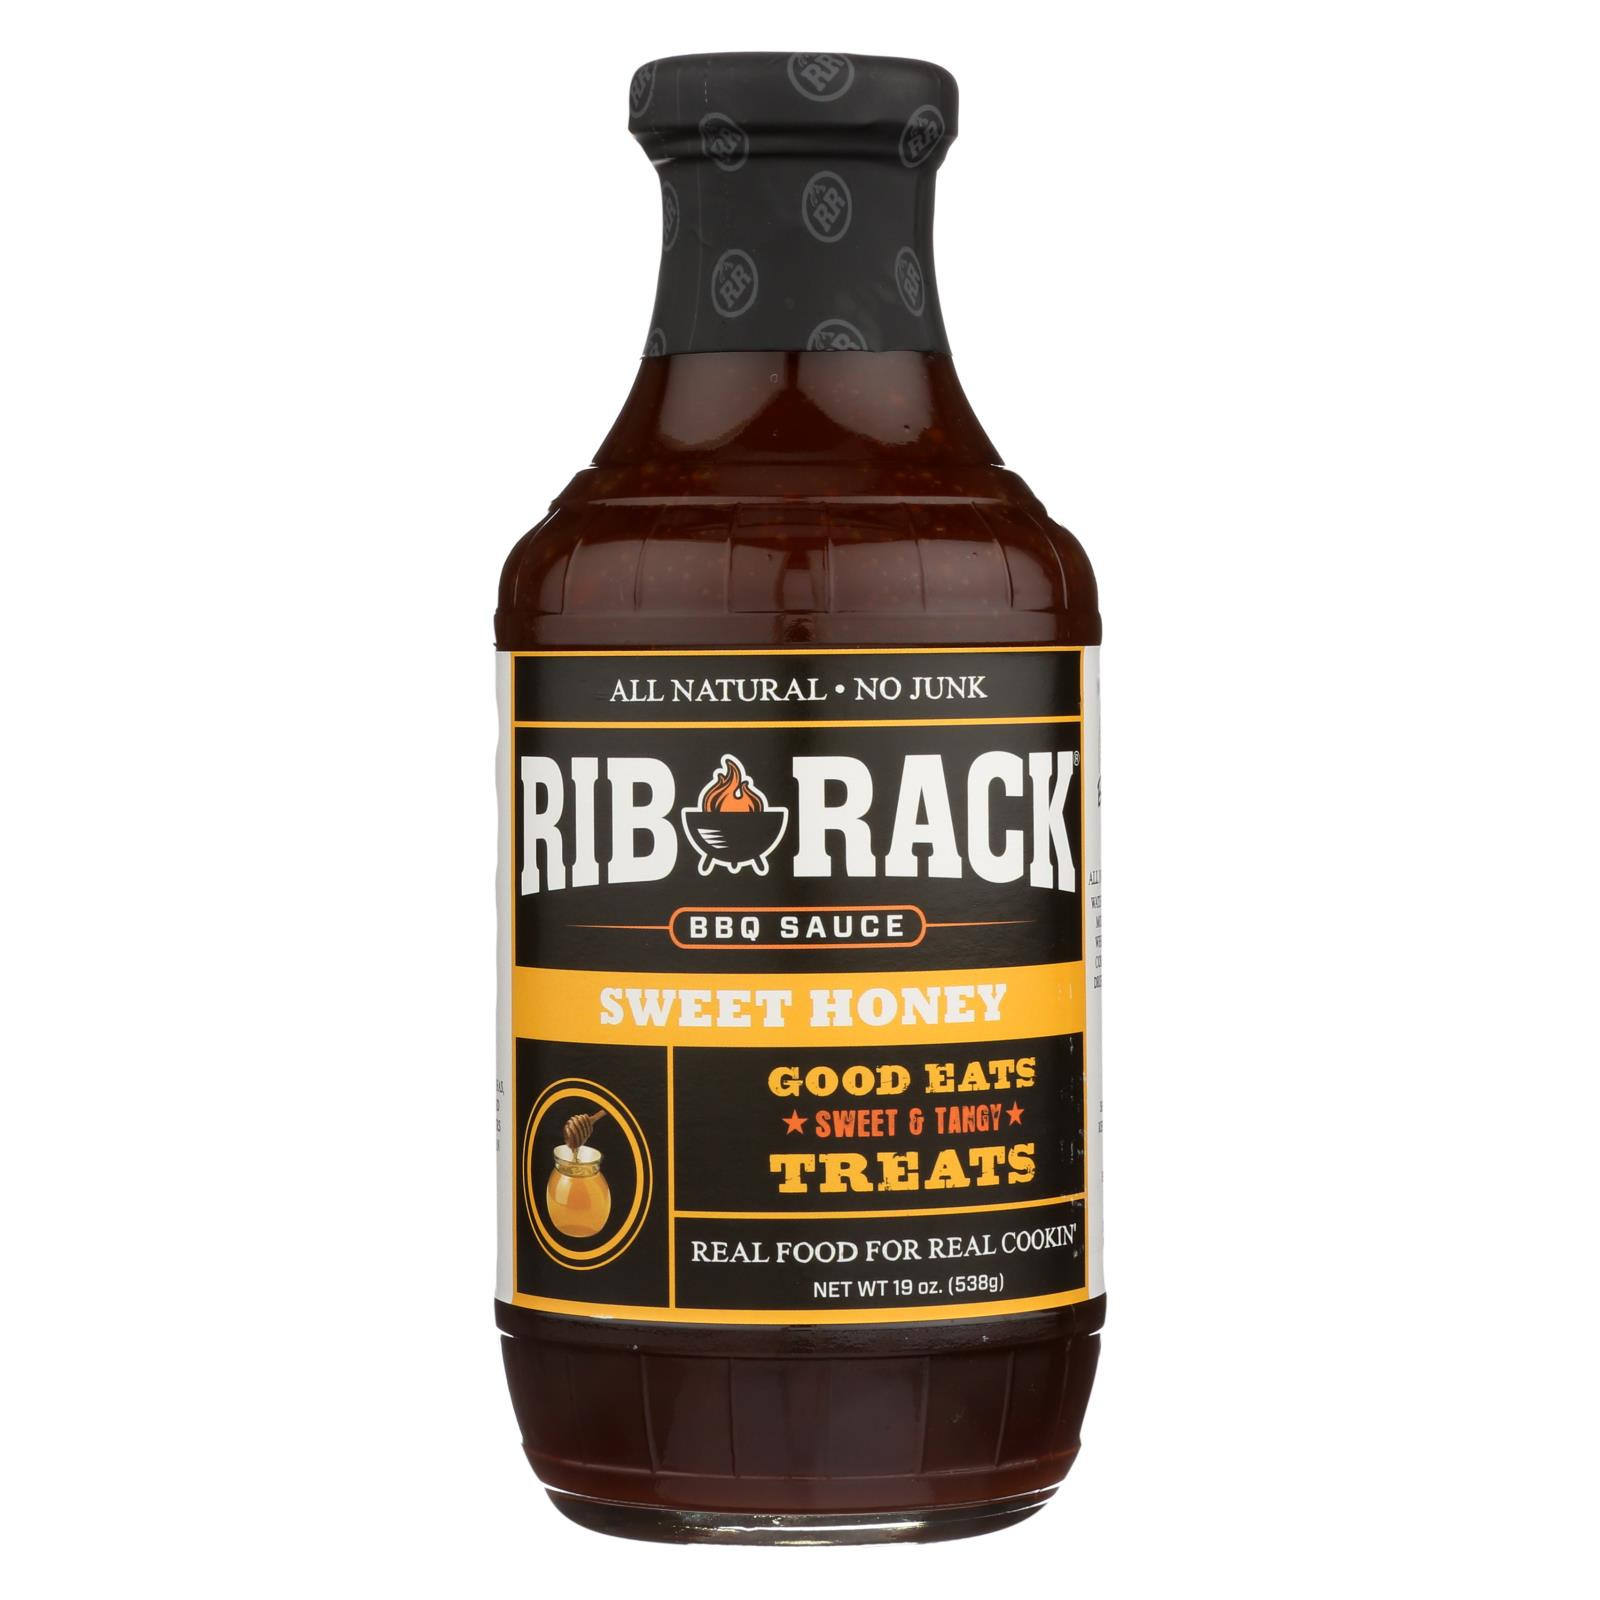 Rib Rack Bbq Sauce
 Rib Rack BBQ Sauce Sweet Honey Case of 6 19 oz